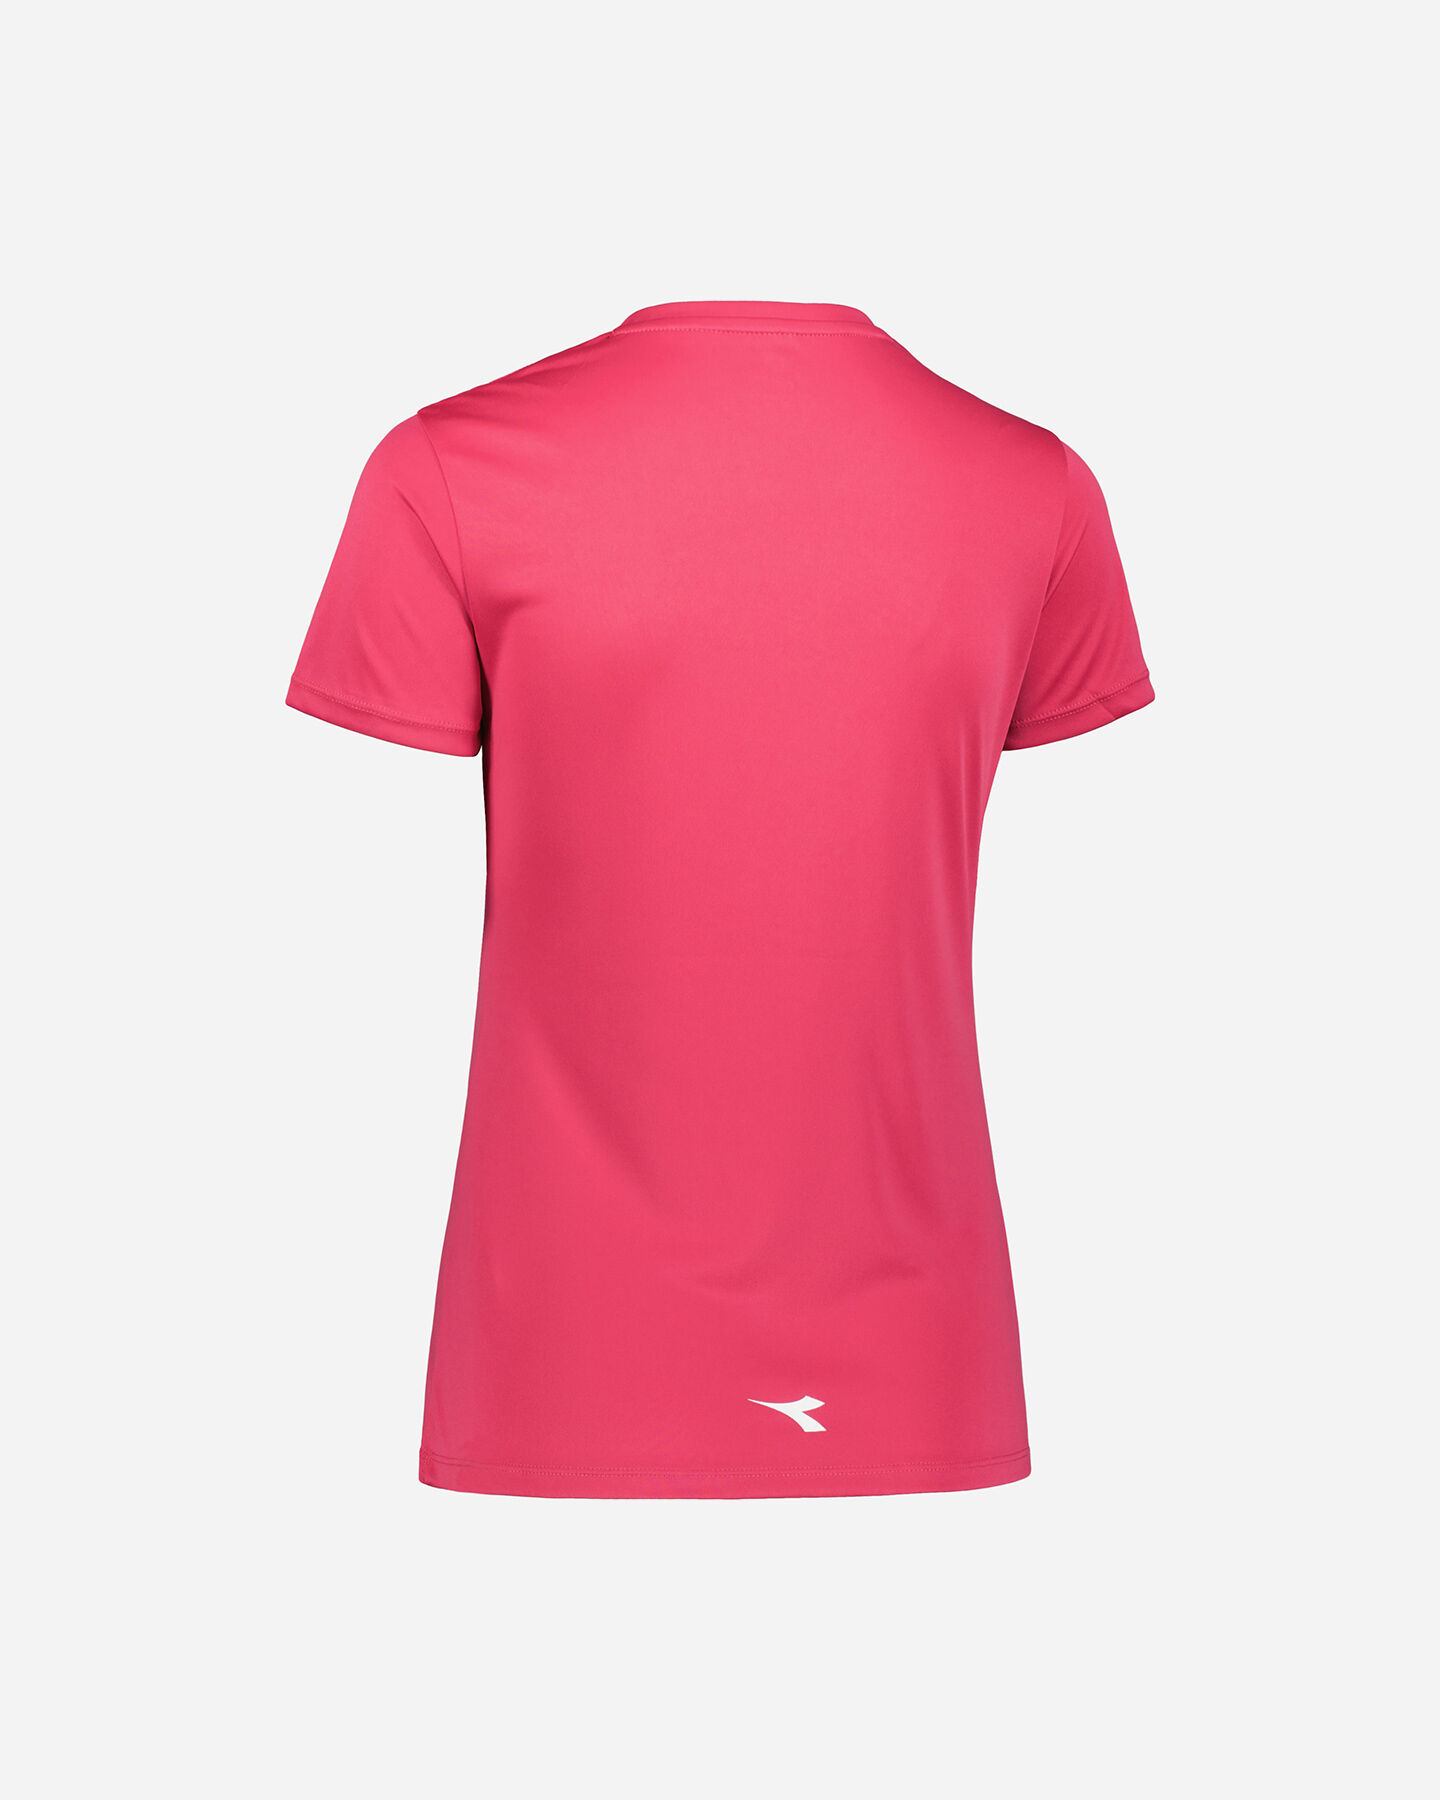  T-Shirt tennis DIADORA CORE W S5401030|50157|M scatto 1